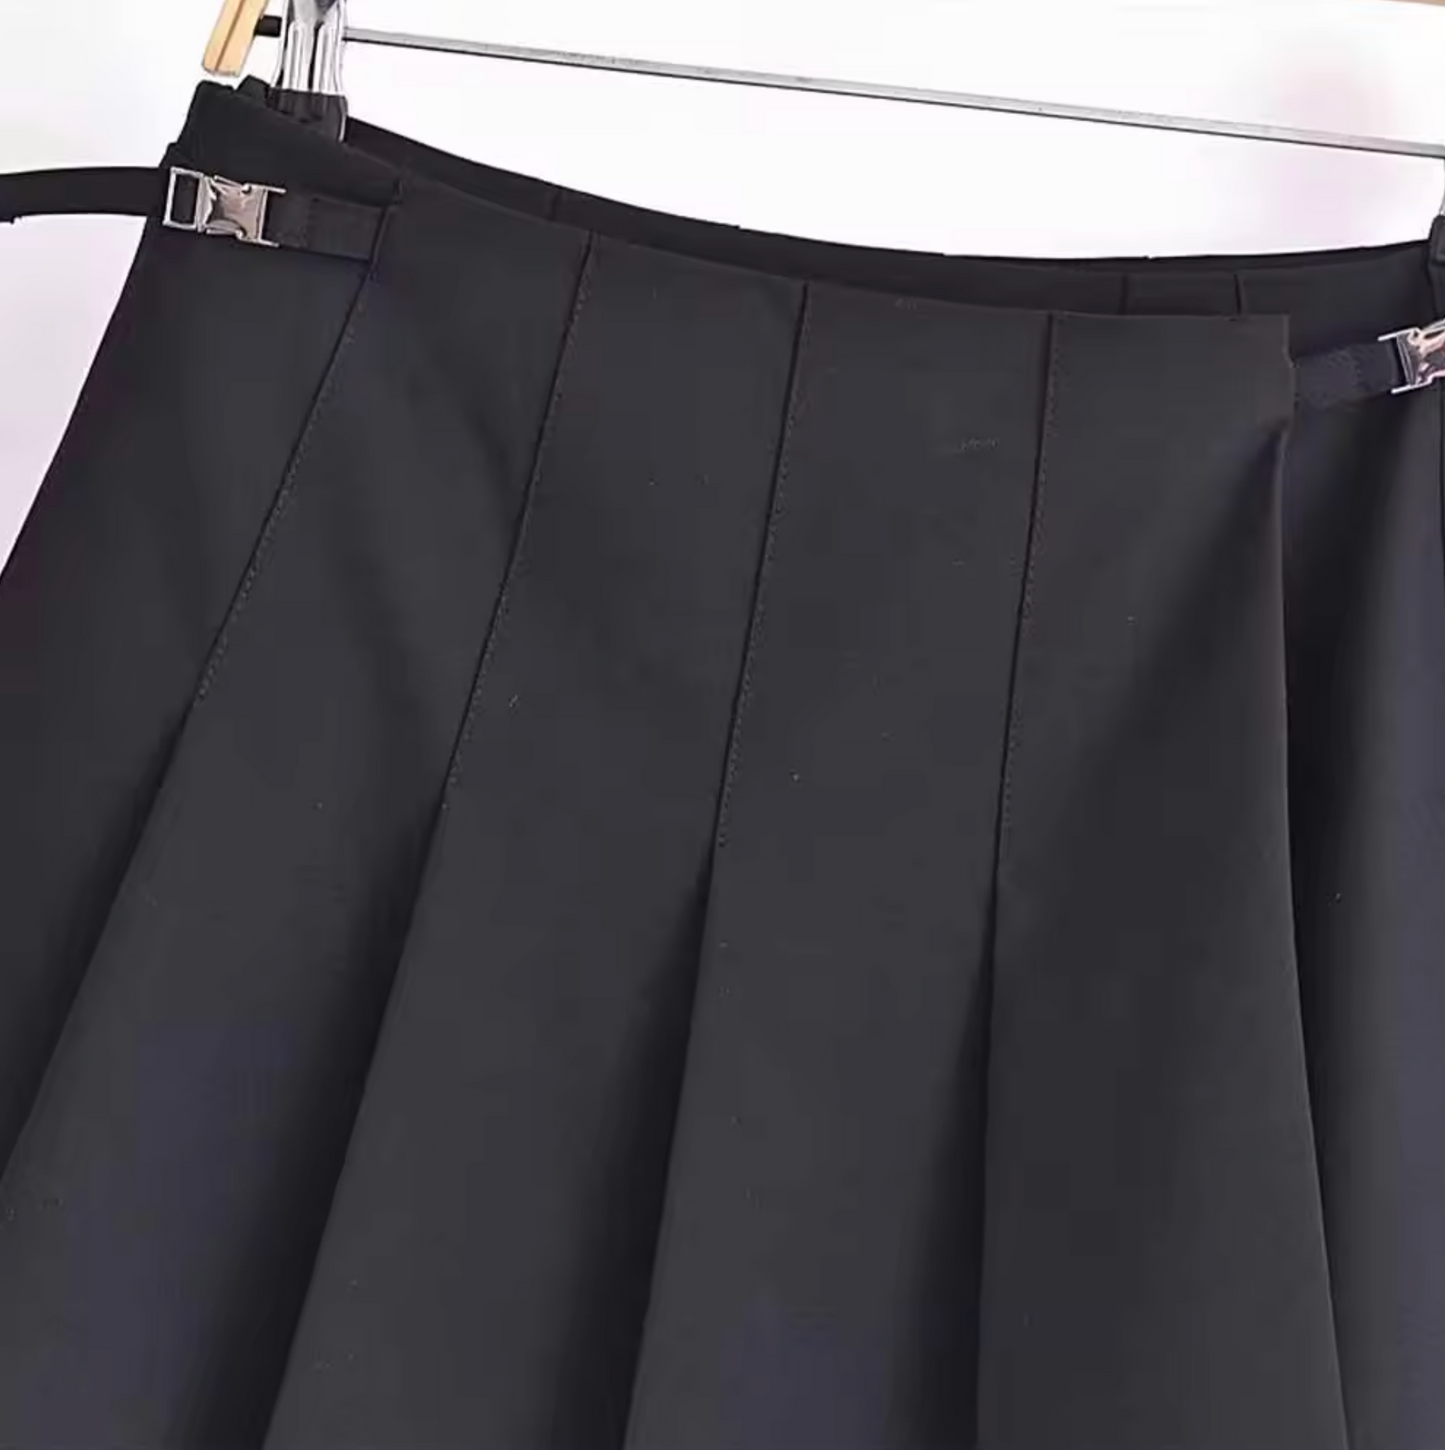 Brigita Mini Skirt